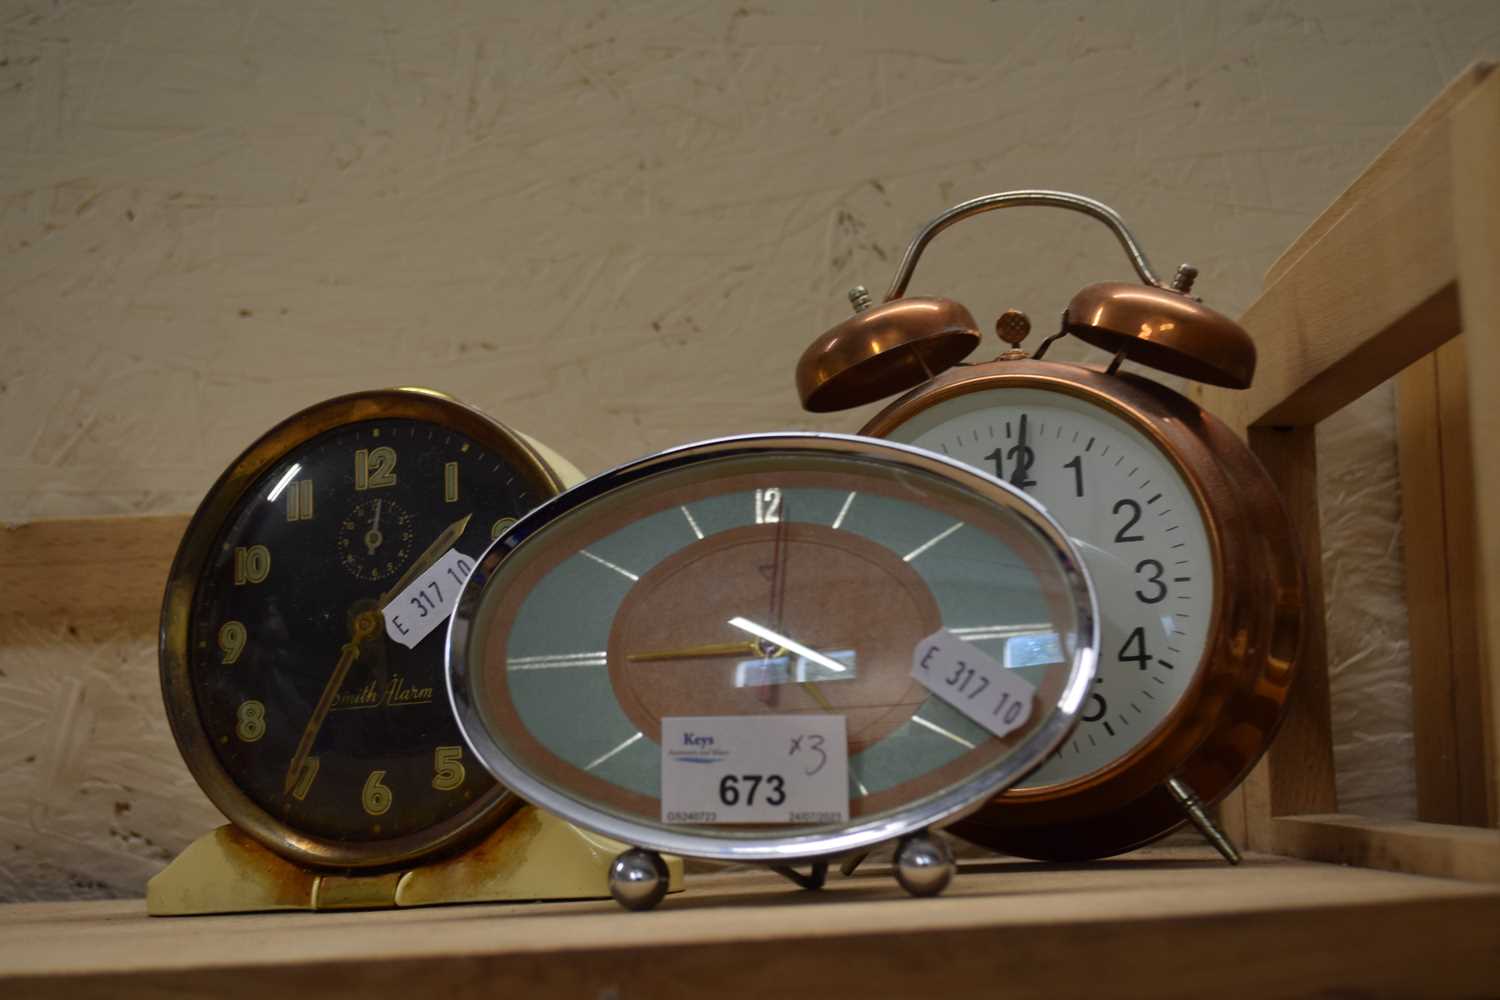 Three alarm clocks